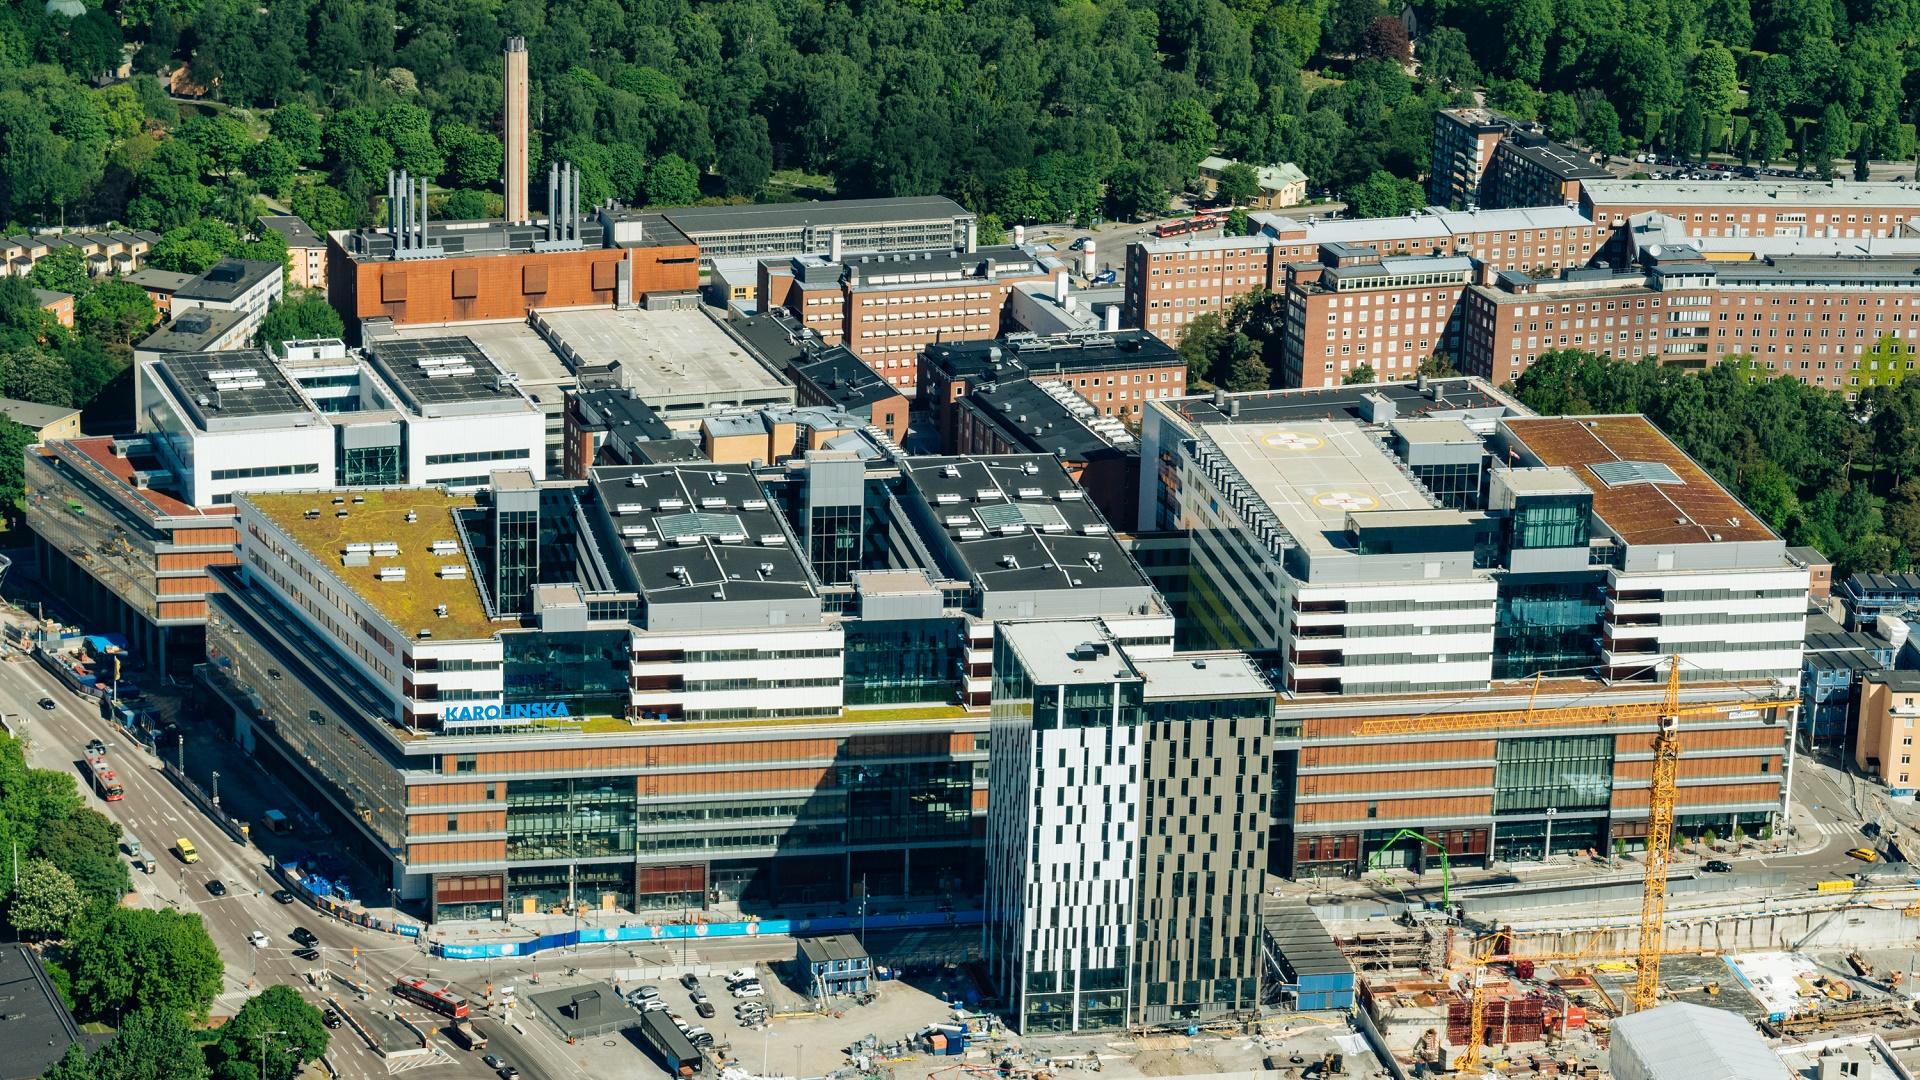 Aerial photo of buildings that are part of New Karolinska hospital in Stockholm.